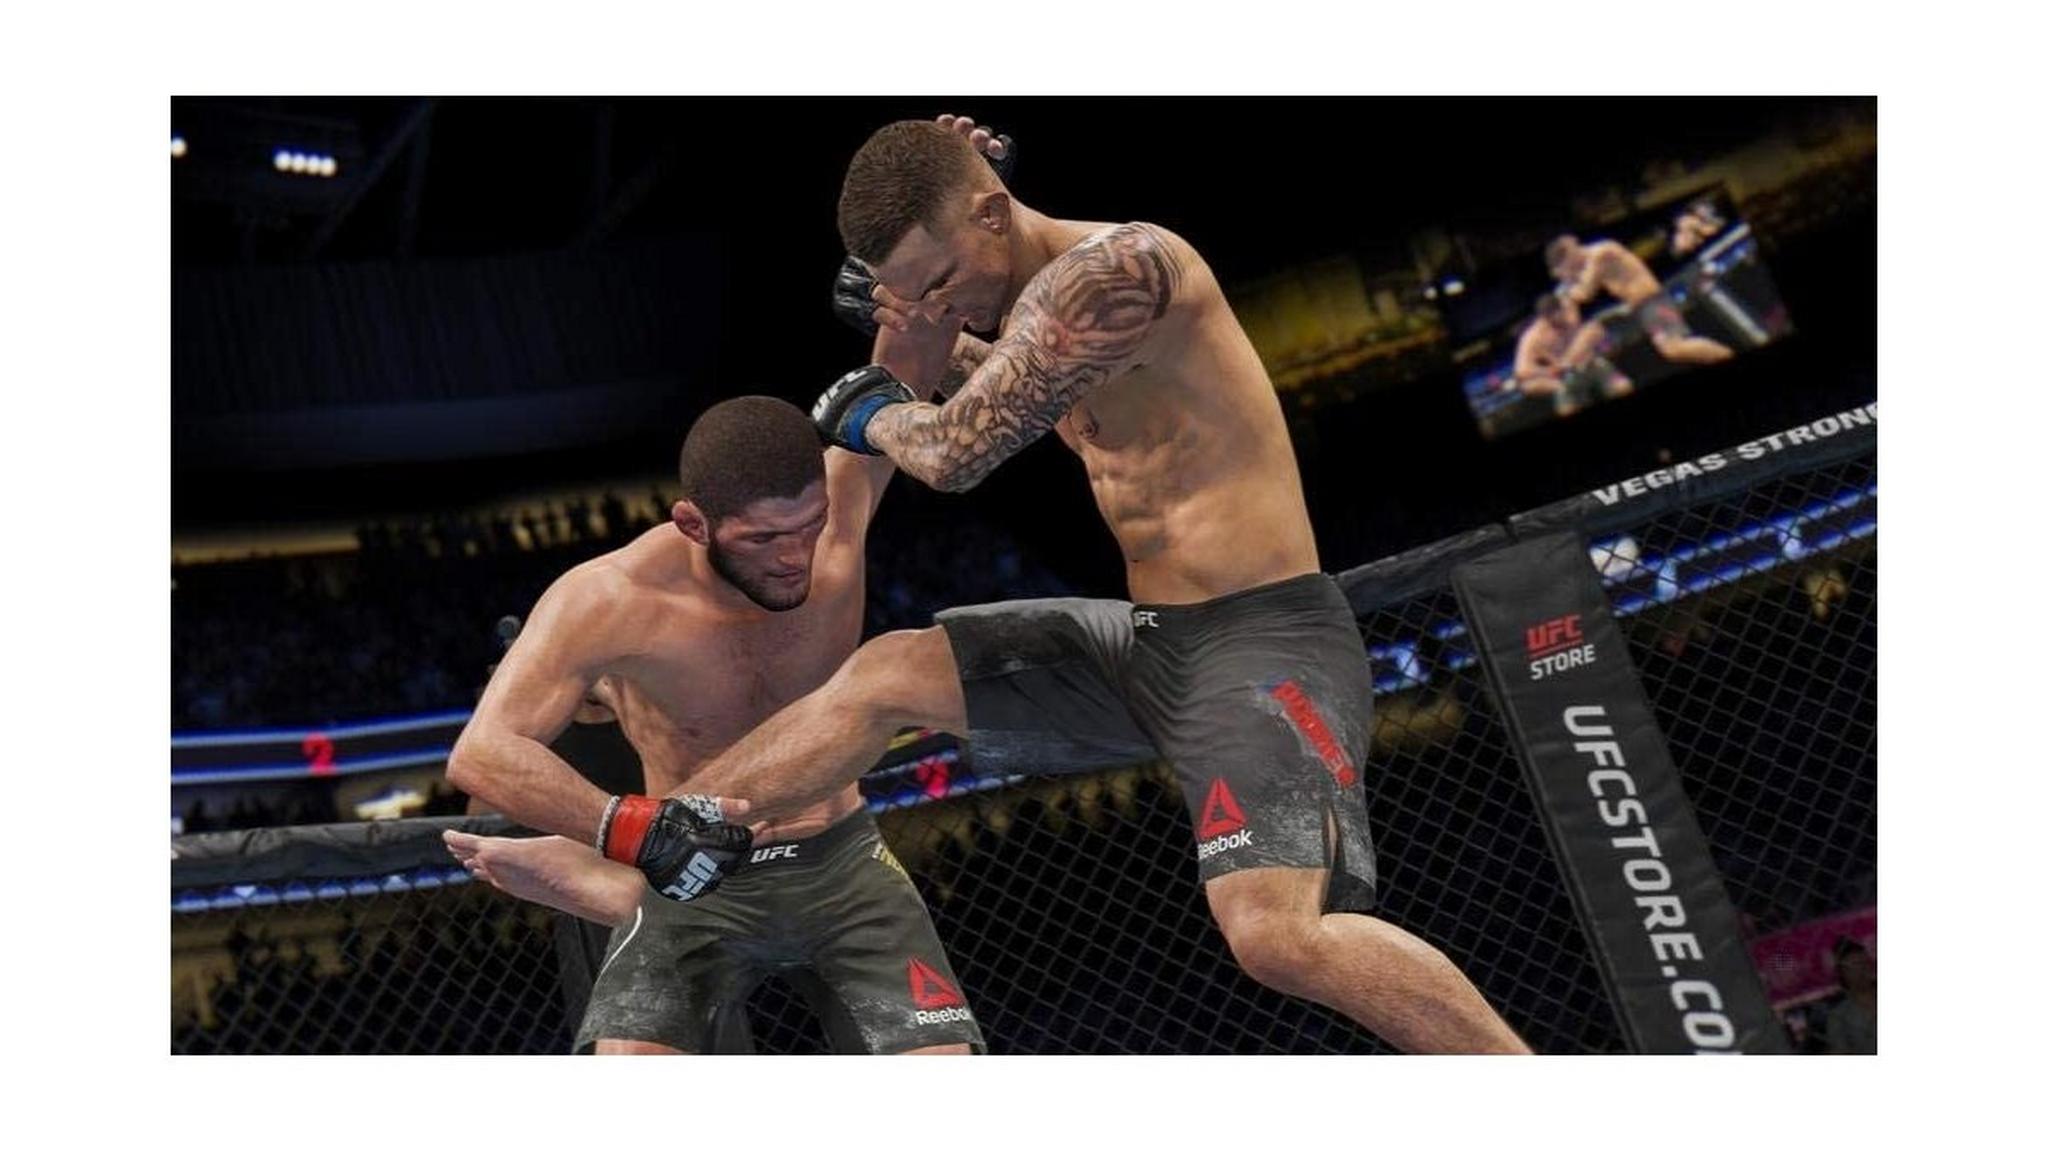 UFC 4 - Playstation 4 Game